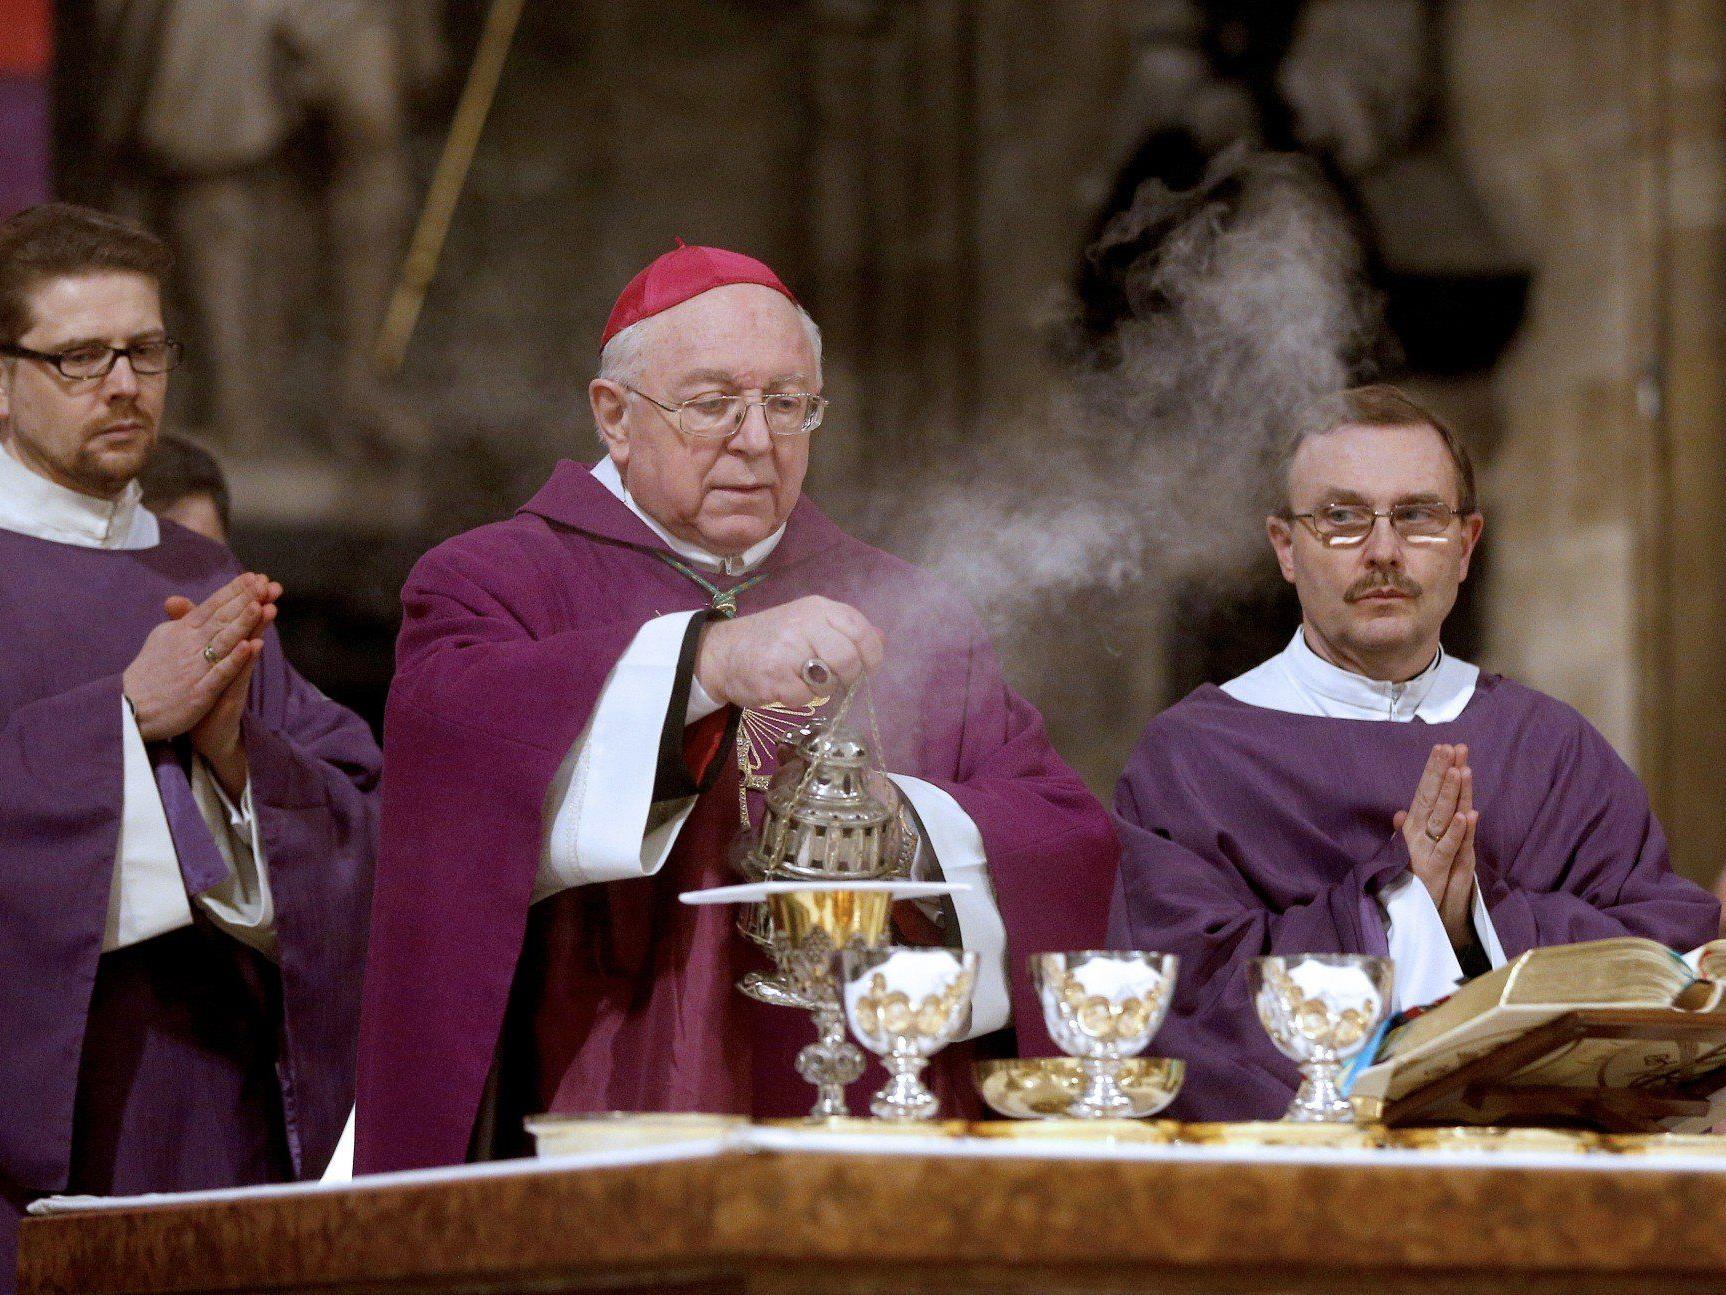 Papst tritt zurück: Dankmesse am 28. Februar im Wiener Stephansdom